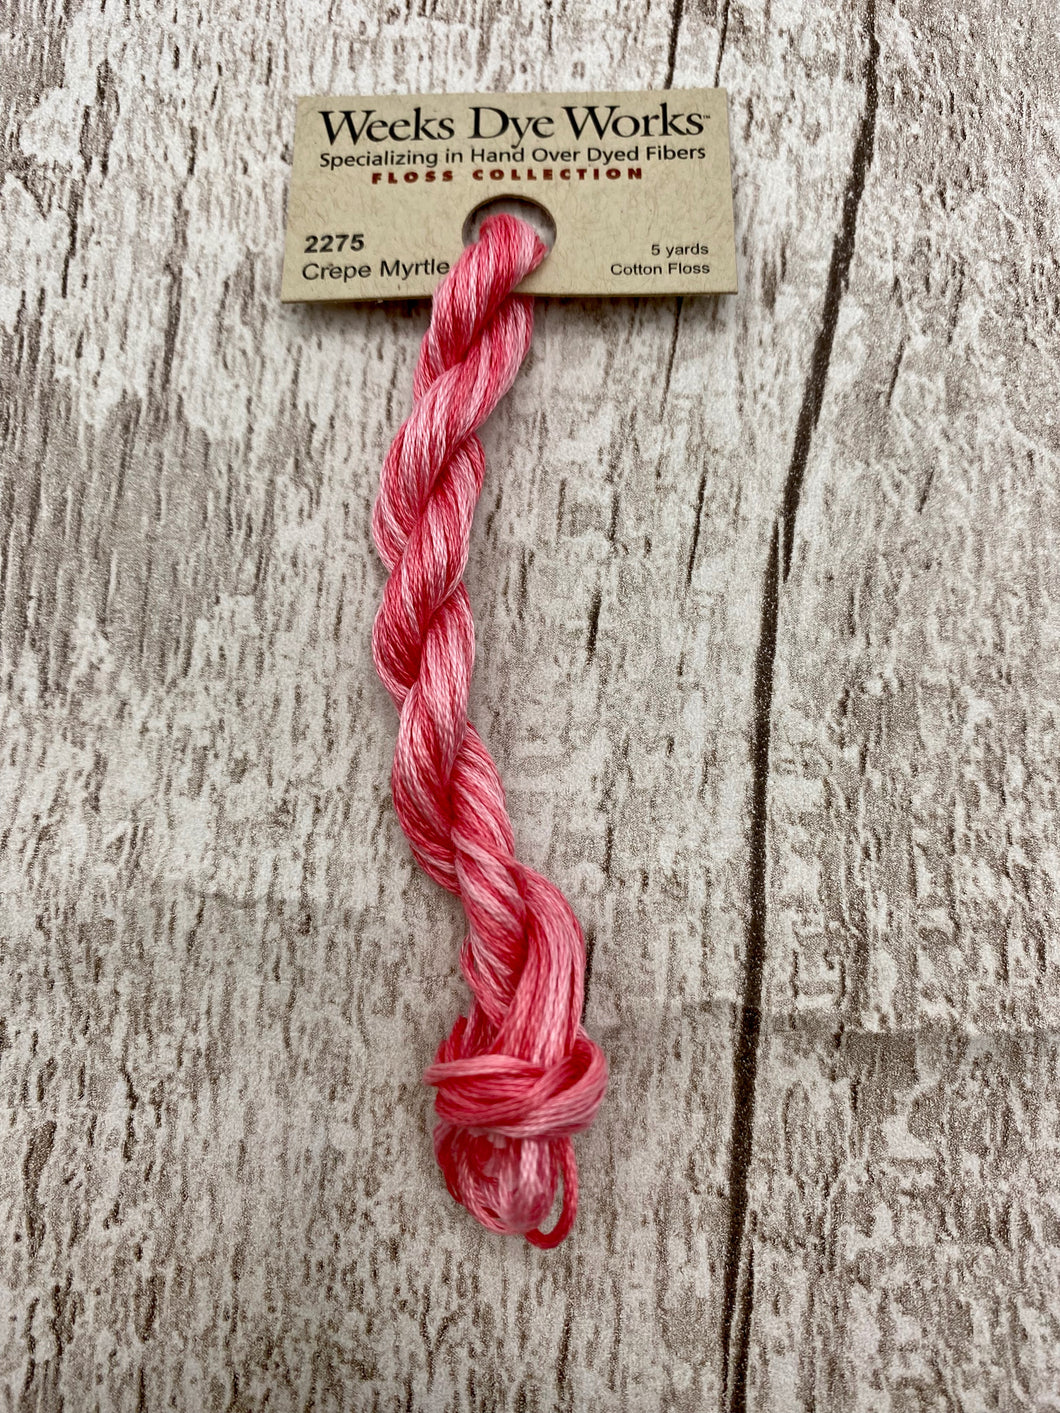 Crepe Myrtle (#2275), Weeks Dye Works 6-strand cotton floss